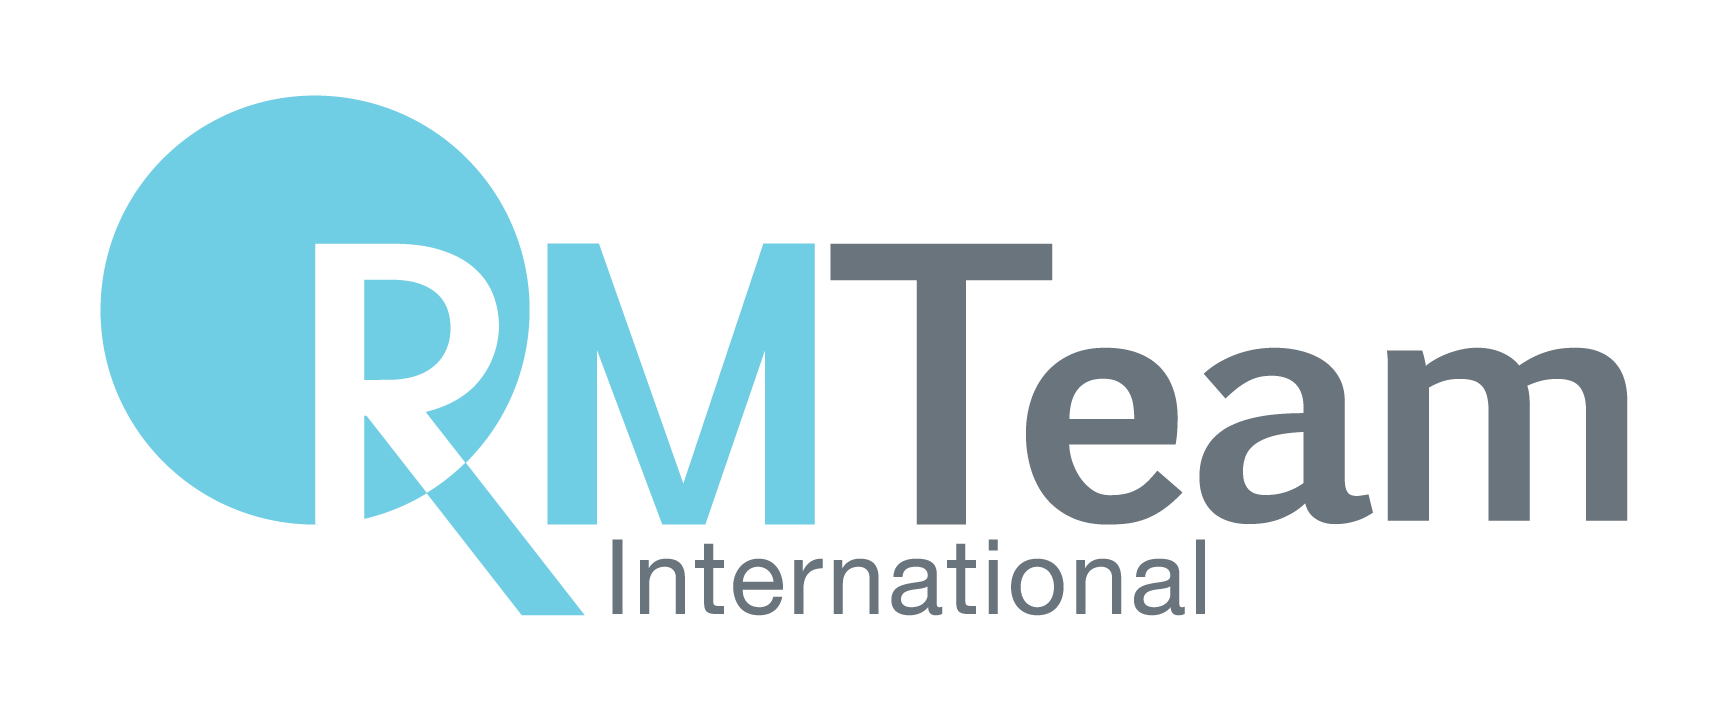 RMTeam International